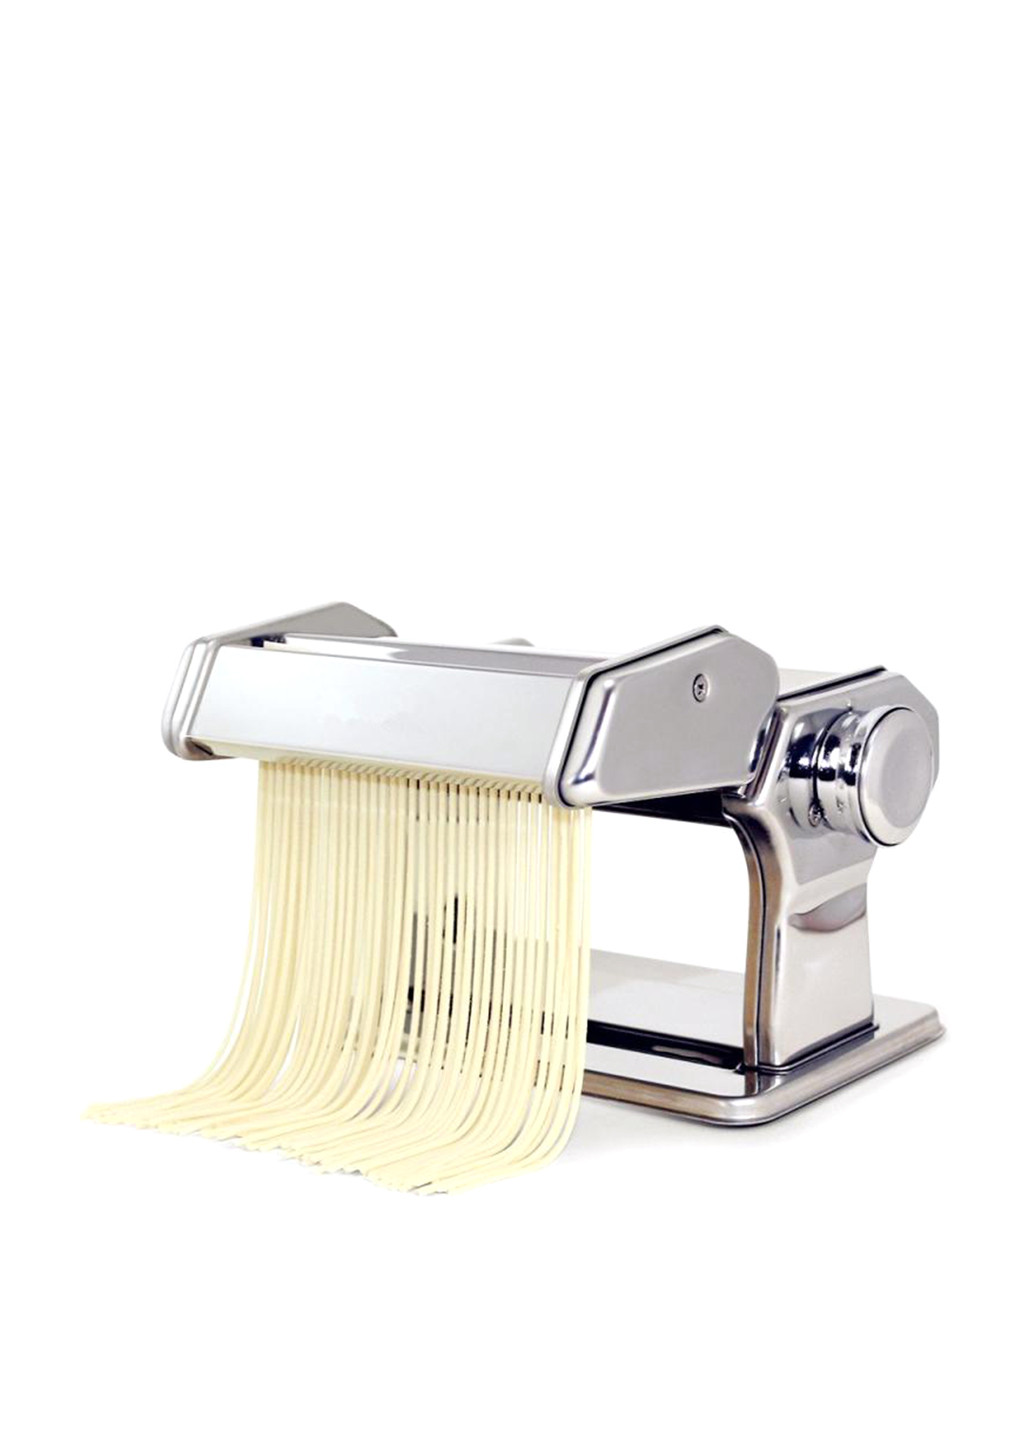 Машинка для изготовления макарон Pasta Machine, 15х20х35 см TV-magazin (81869317)